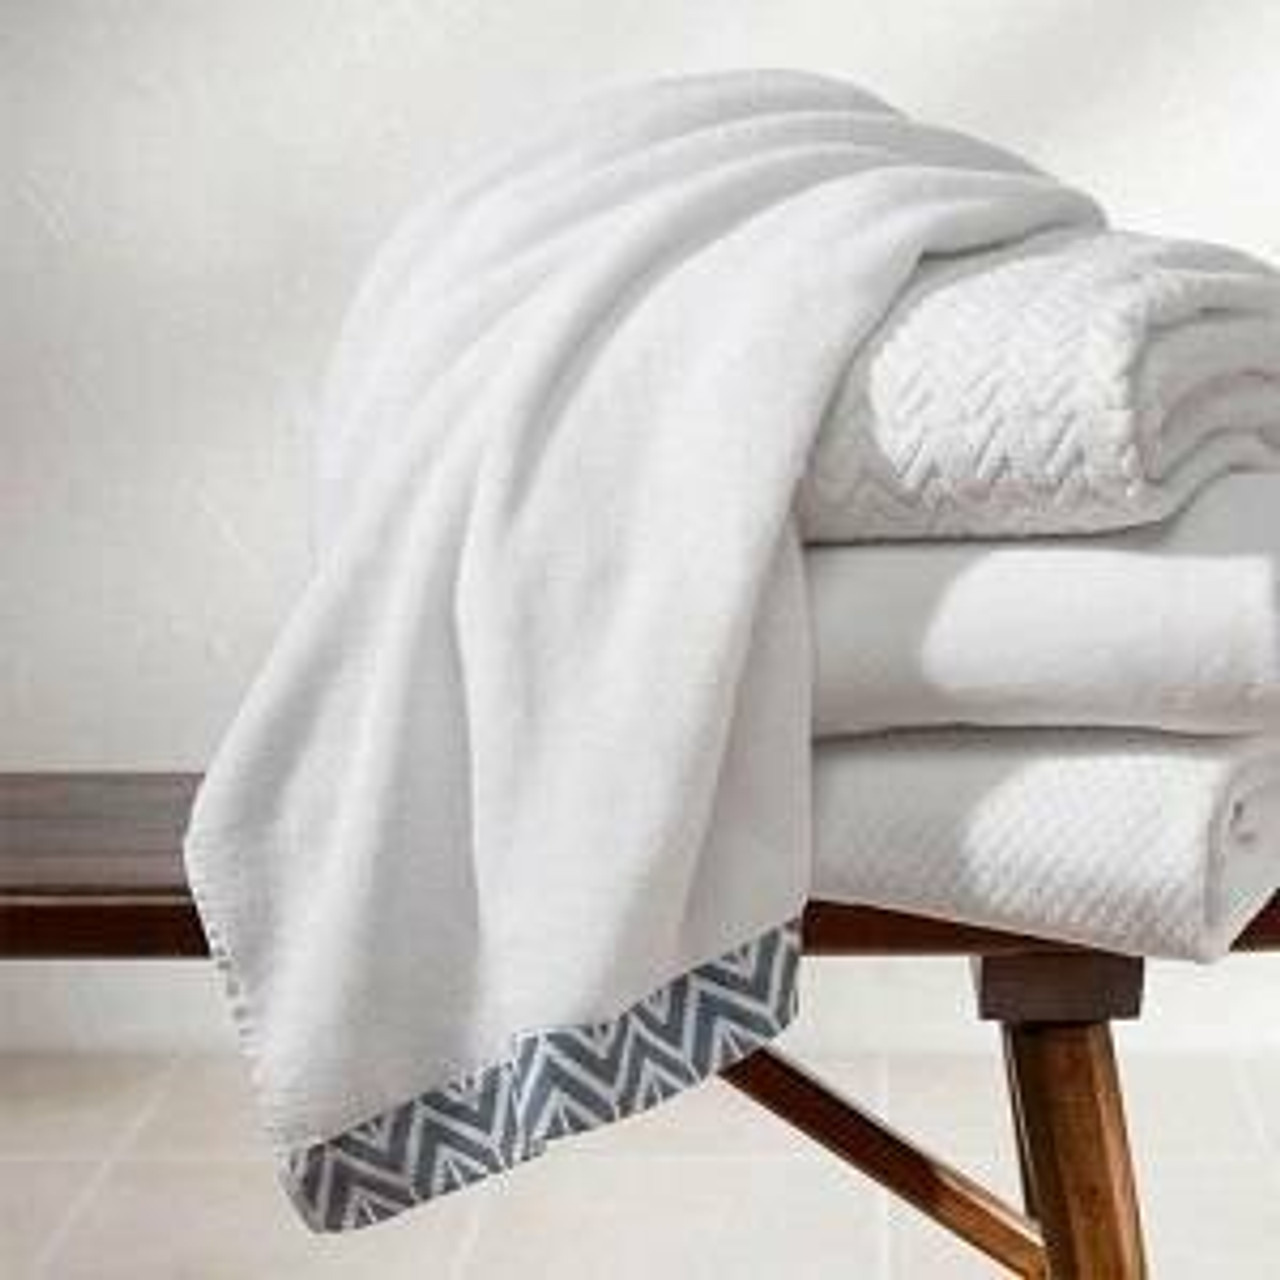 Luxury Hotels Spa Cotton Bath Towels